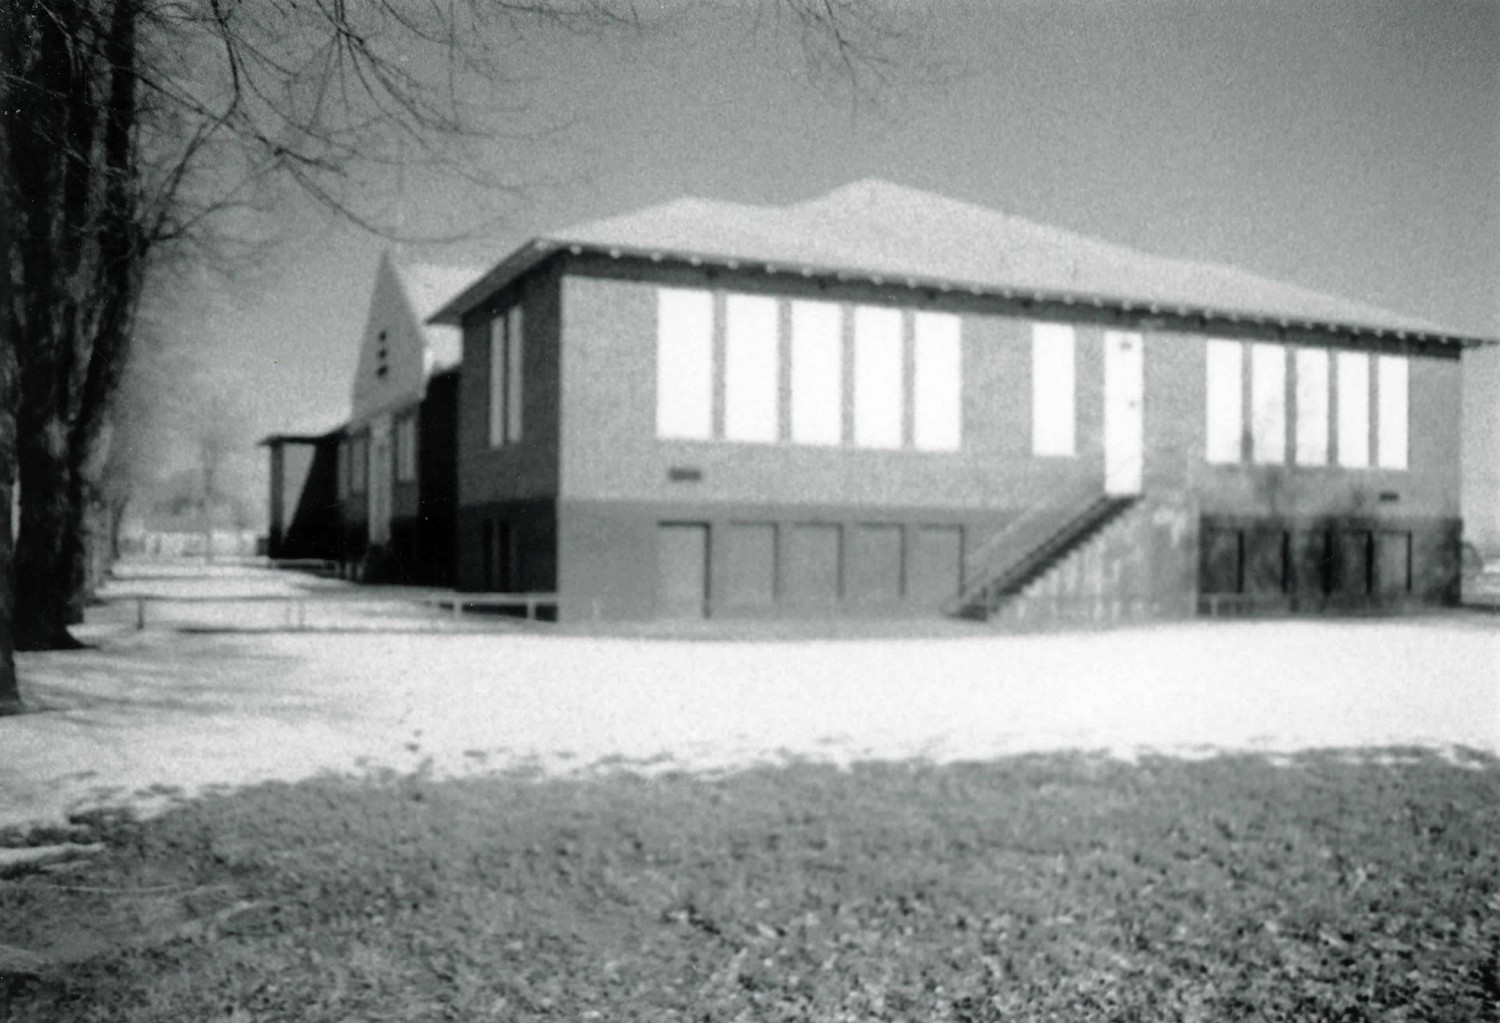 Oats Park Grammar School, Fallon Nevada South end of building (1990)